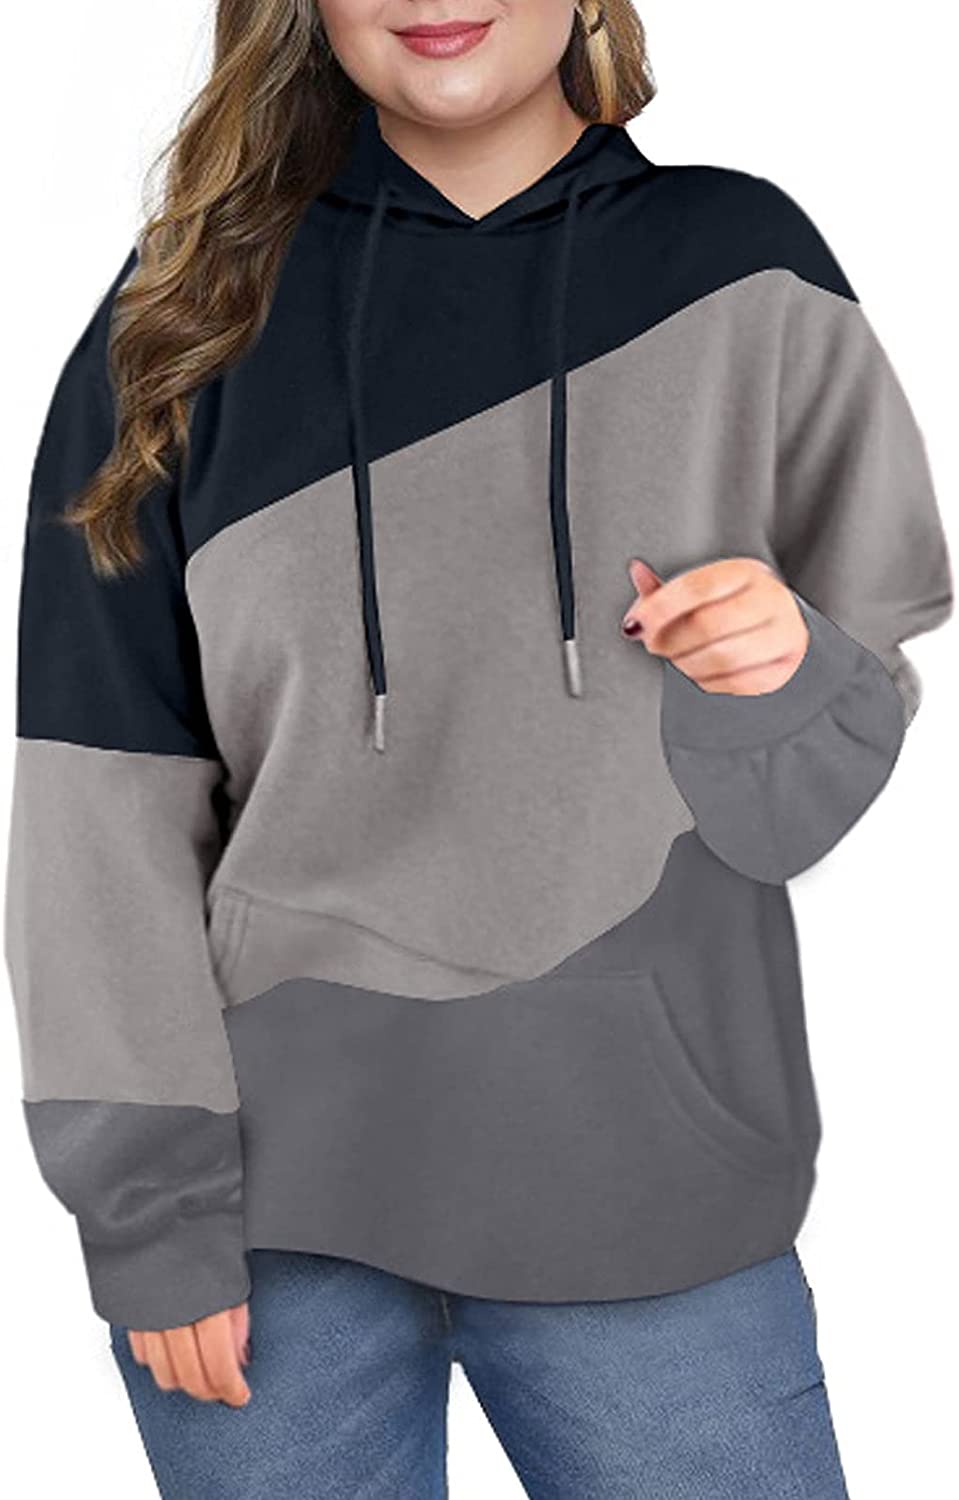  Eytino Womens Plus Size Hooded Sweatshirts Long Sleeve  Waffle Drawstring Pullover Tops